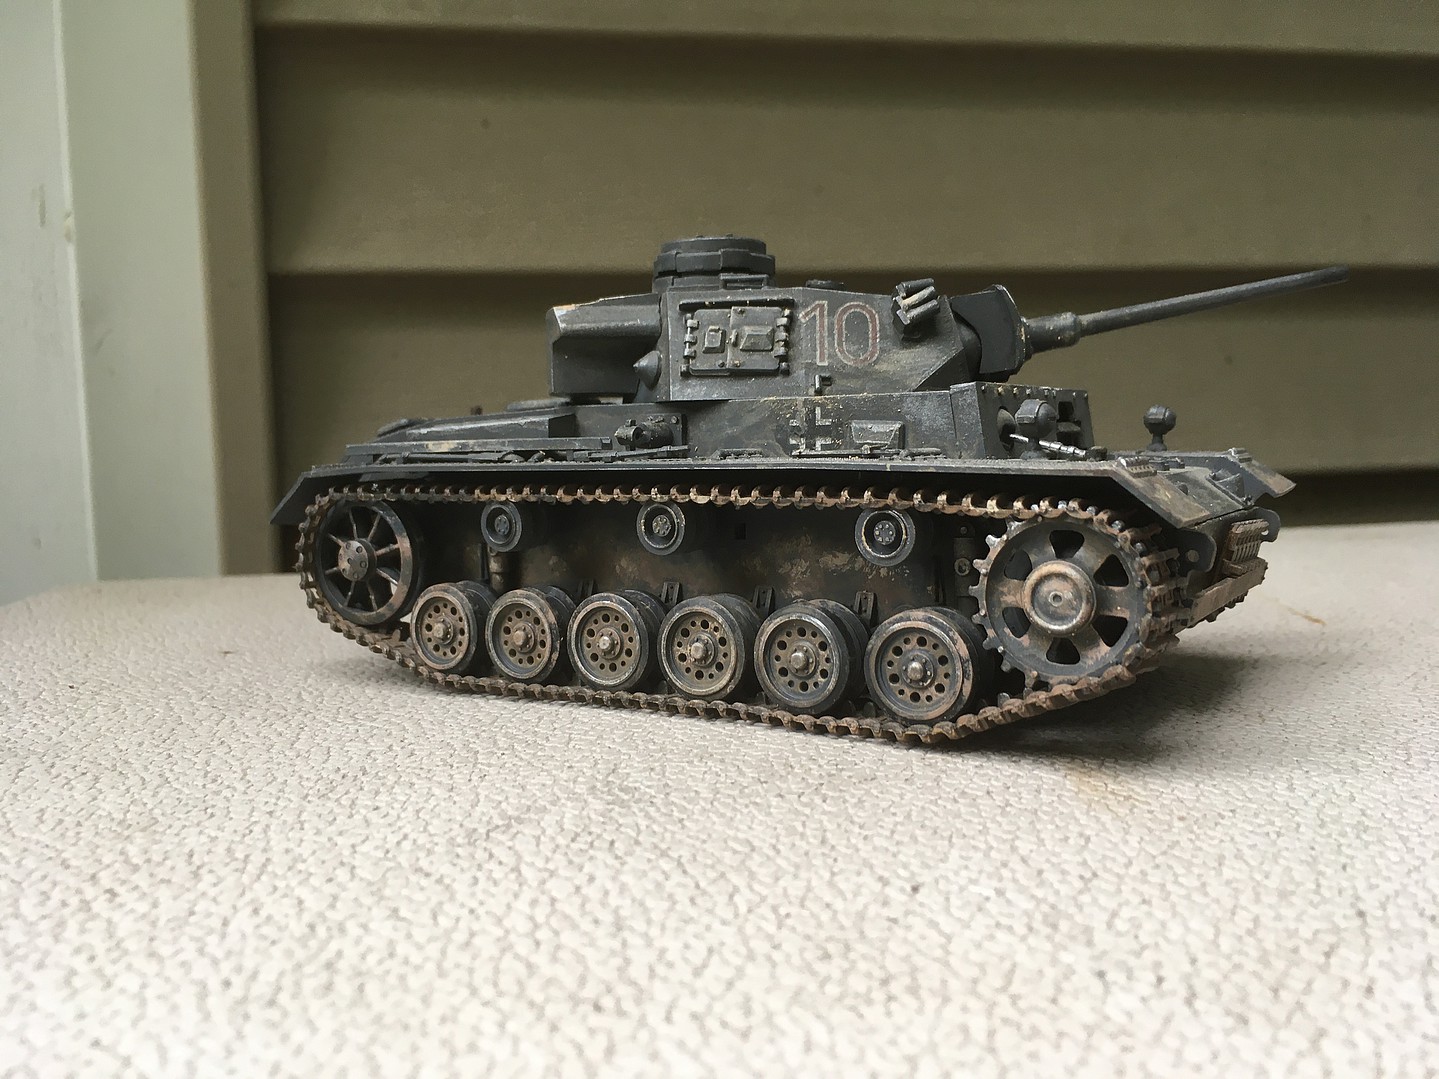 Tanque Panzerkampfwagen III Ausf. LI, Escala 1:35. Marca Tamiya, Ref: 35215.